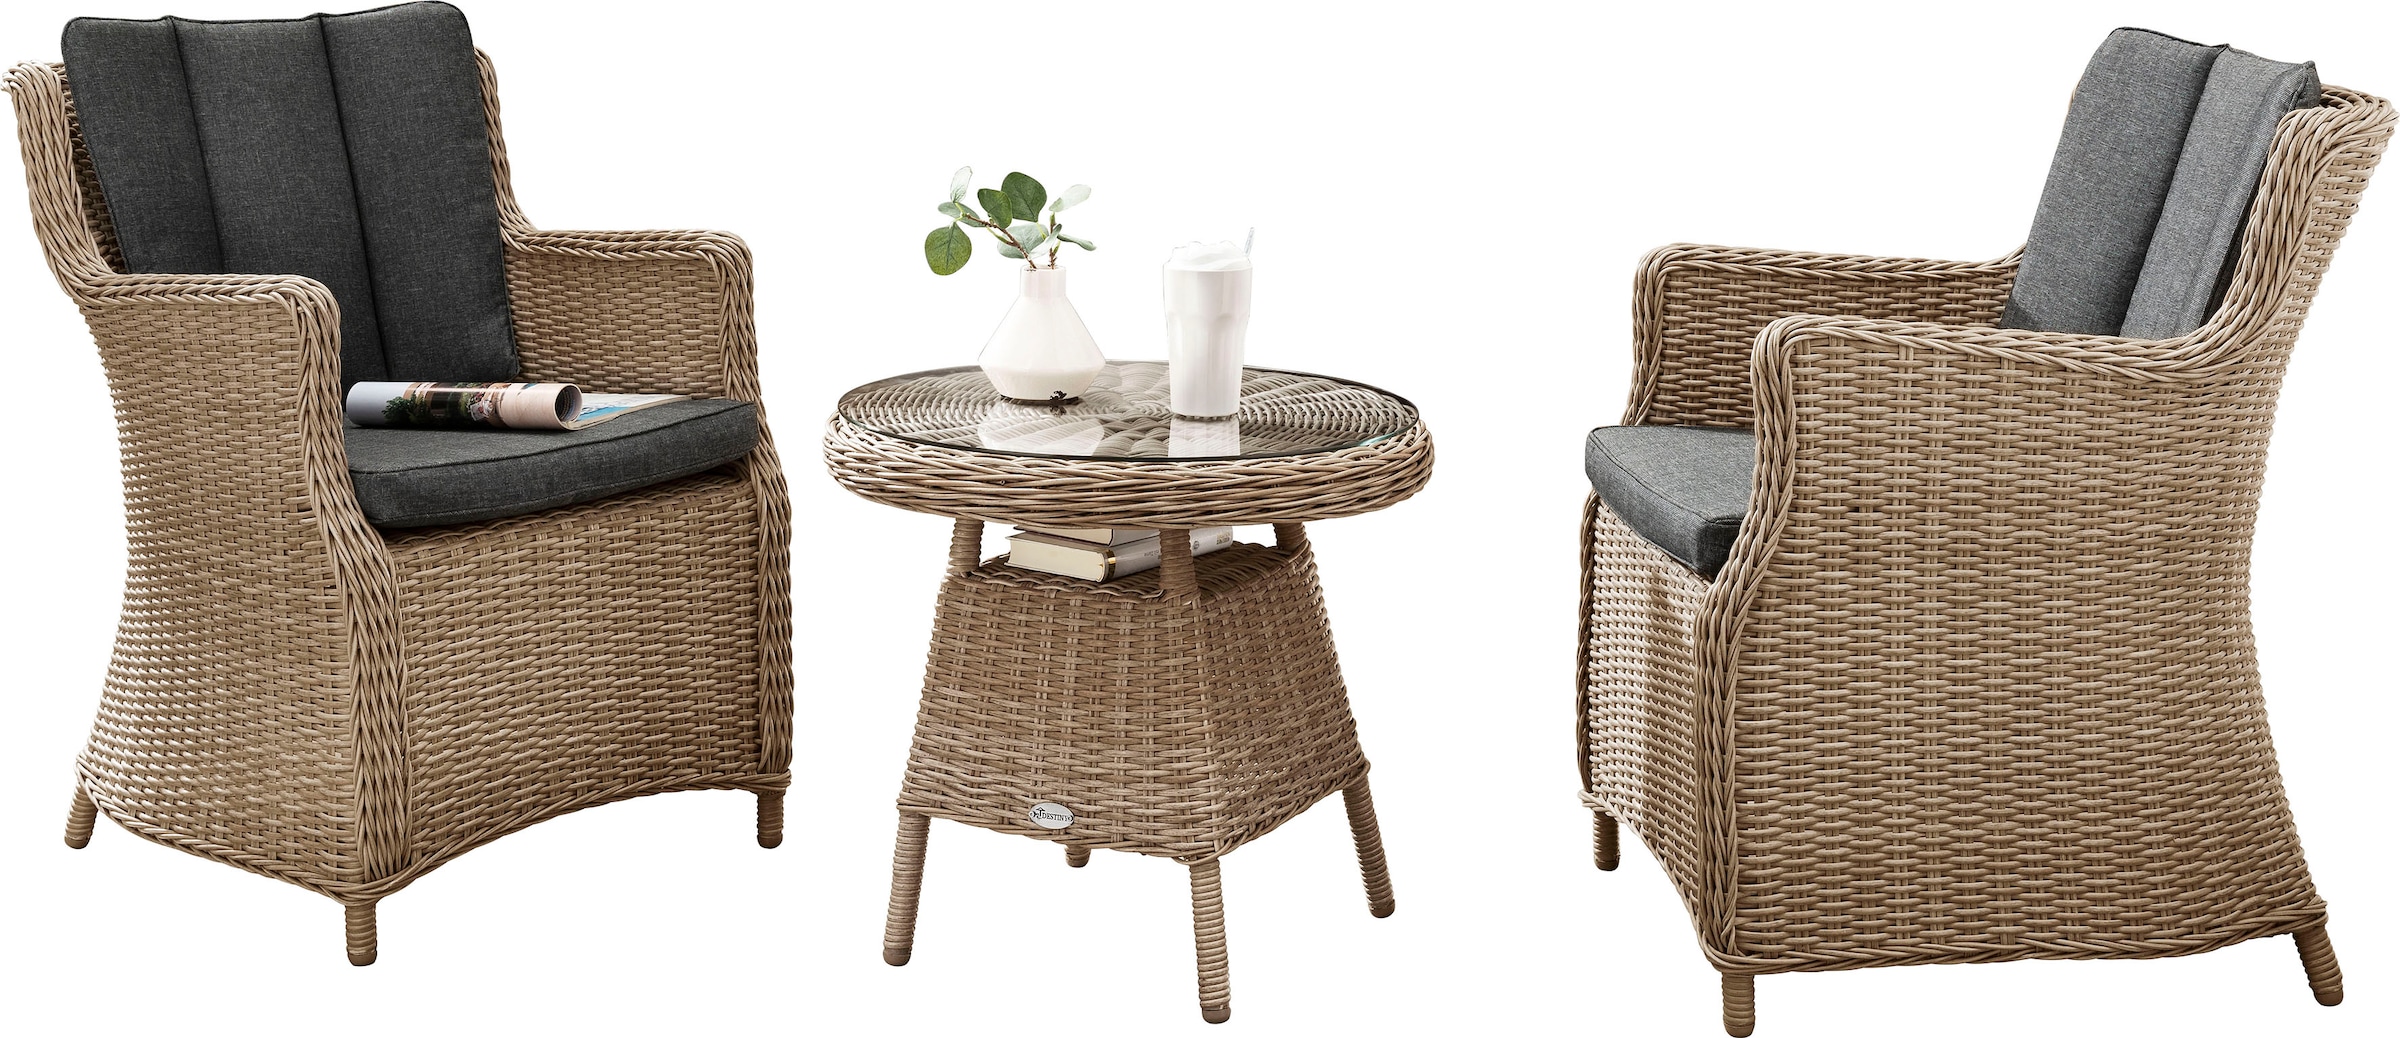 Destiny Balkonset »LUNA MALAGA«, (Set, 7 tlg.), Polyrattan, 2 Sessel +  Kaffeetisch Ø 60x55 cm, + Auflagen grau bestellen online bei OTTO